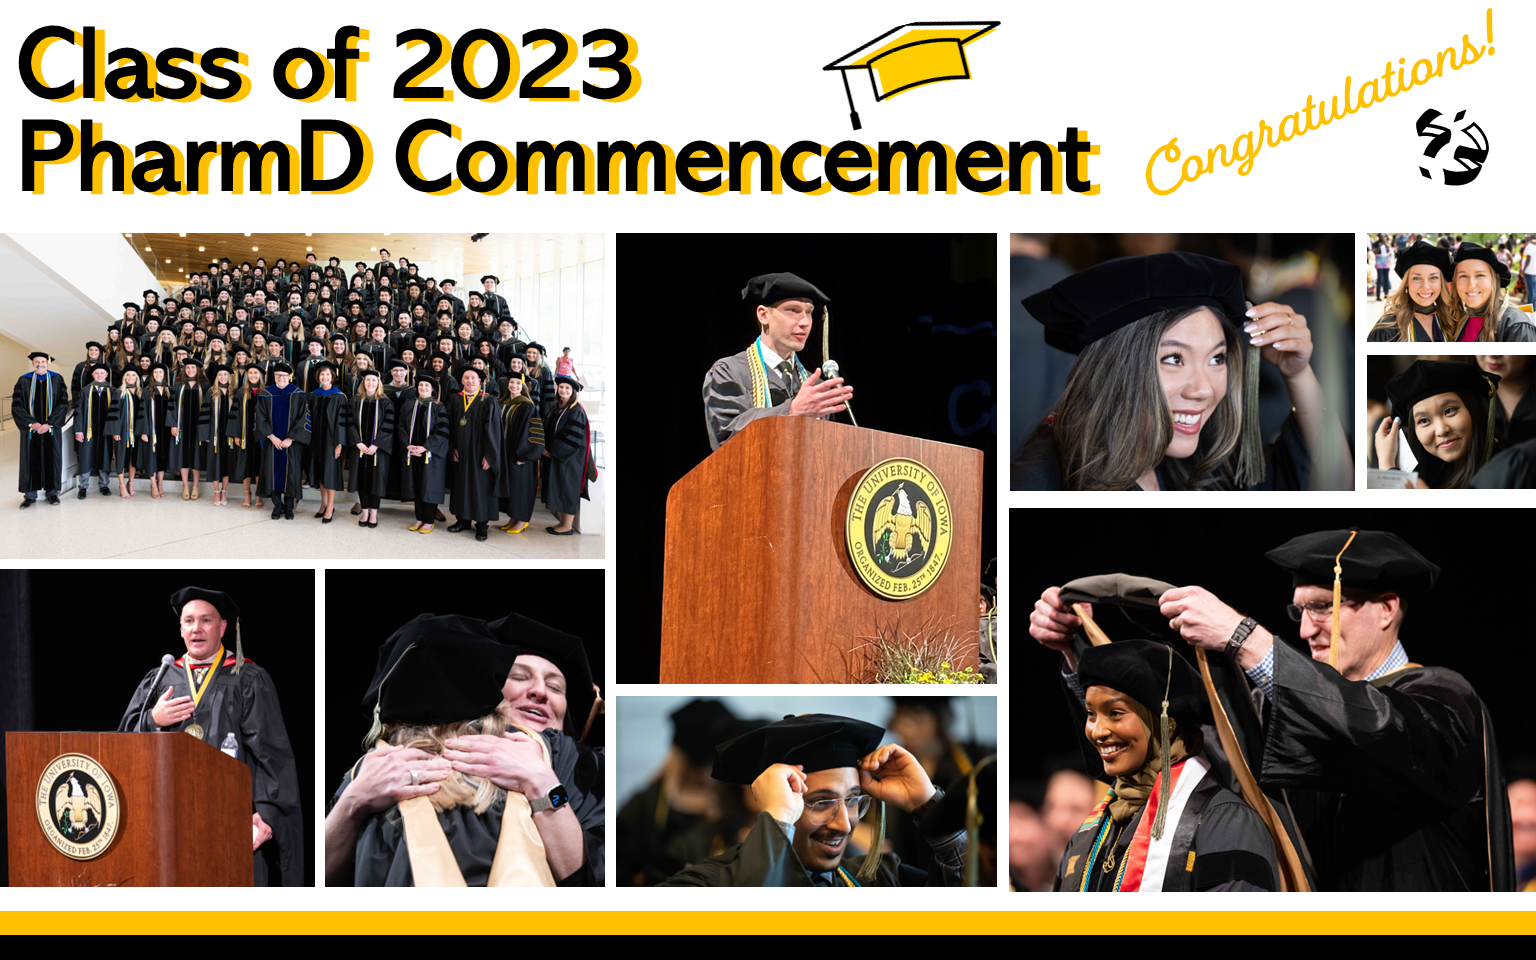 Class of 2023 PharmD Graduation